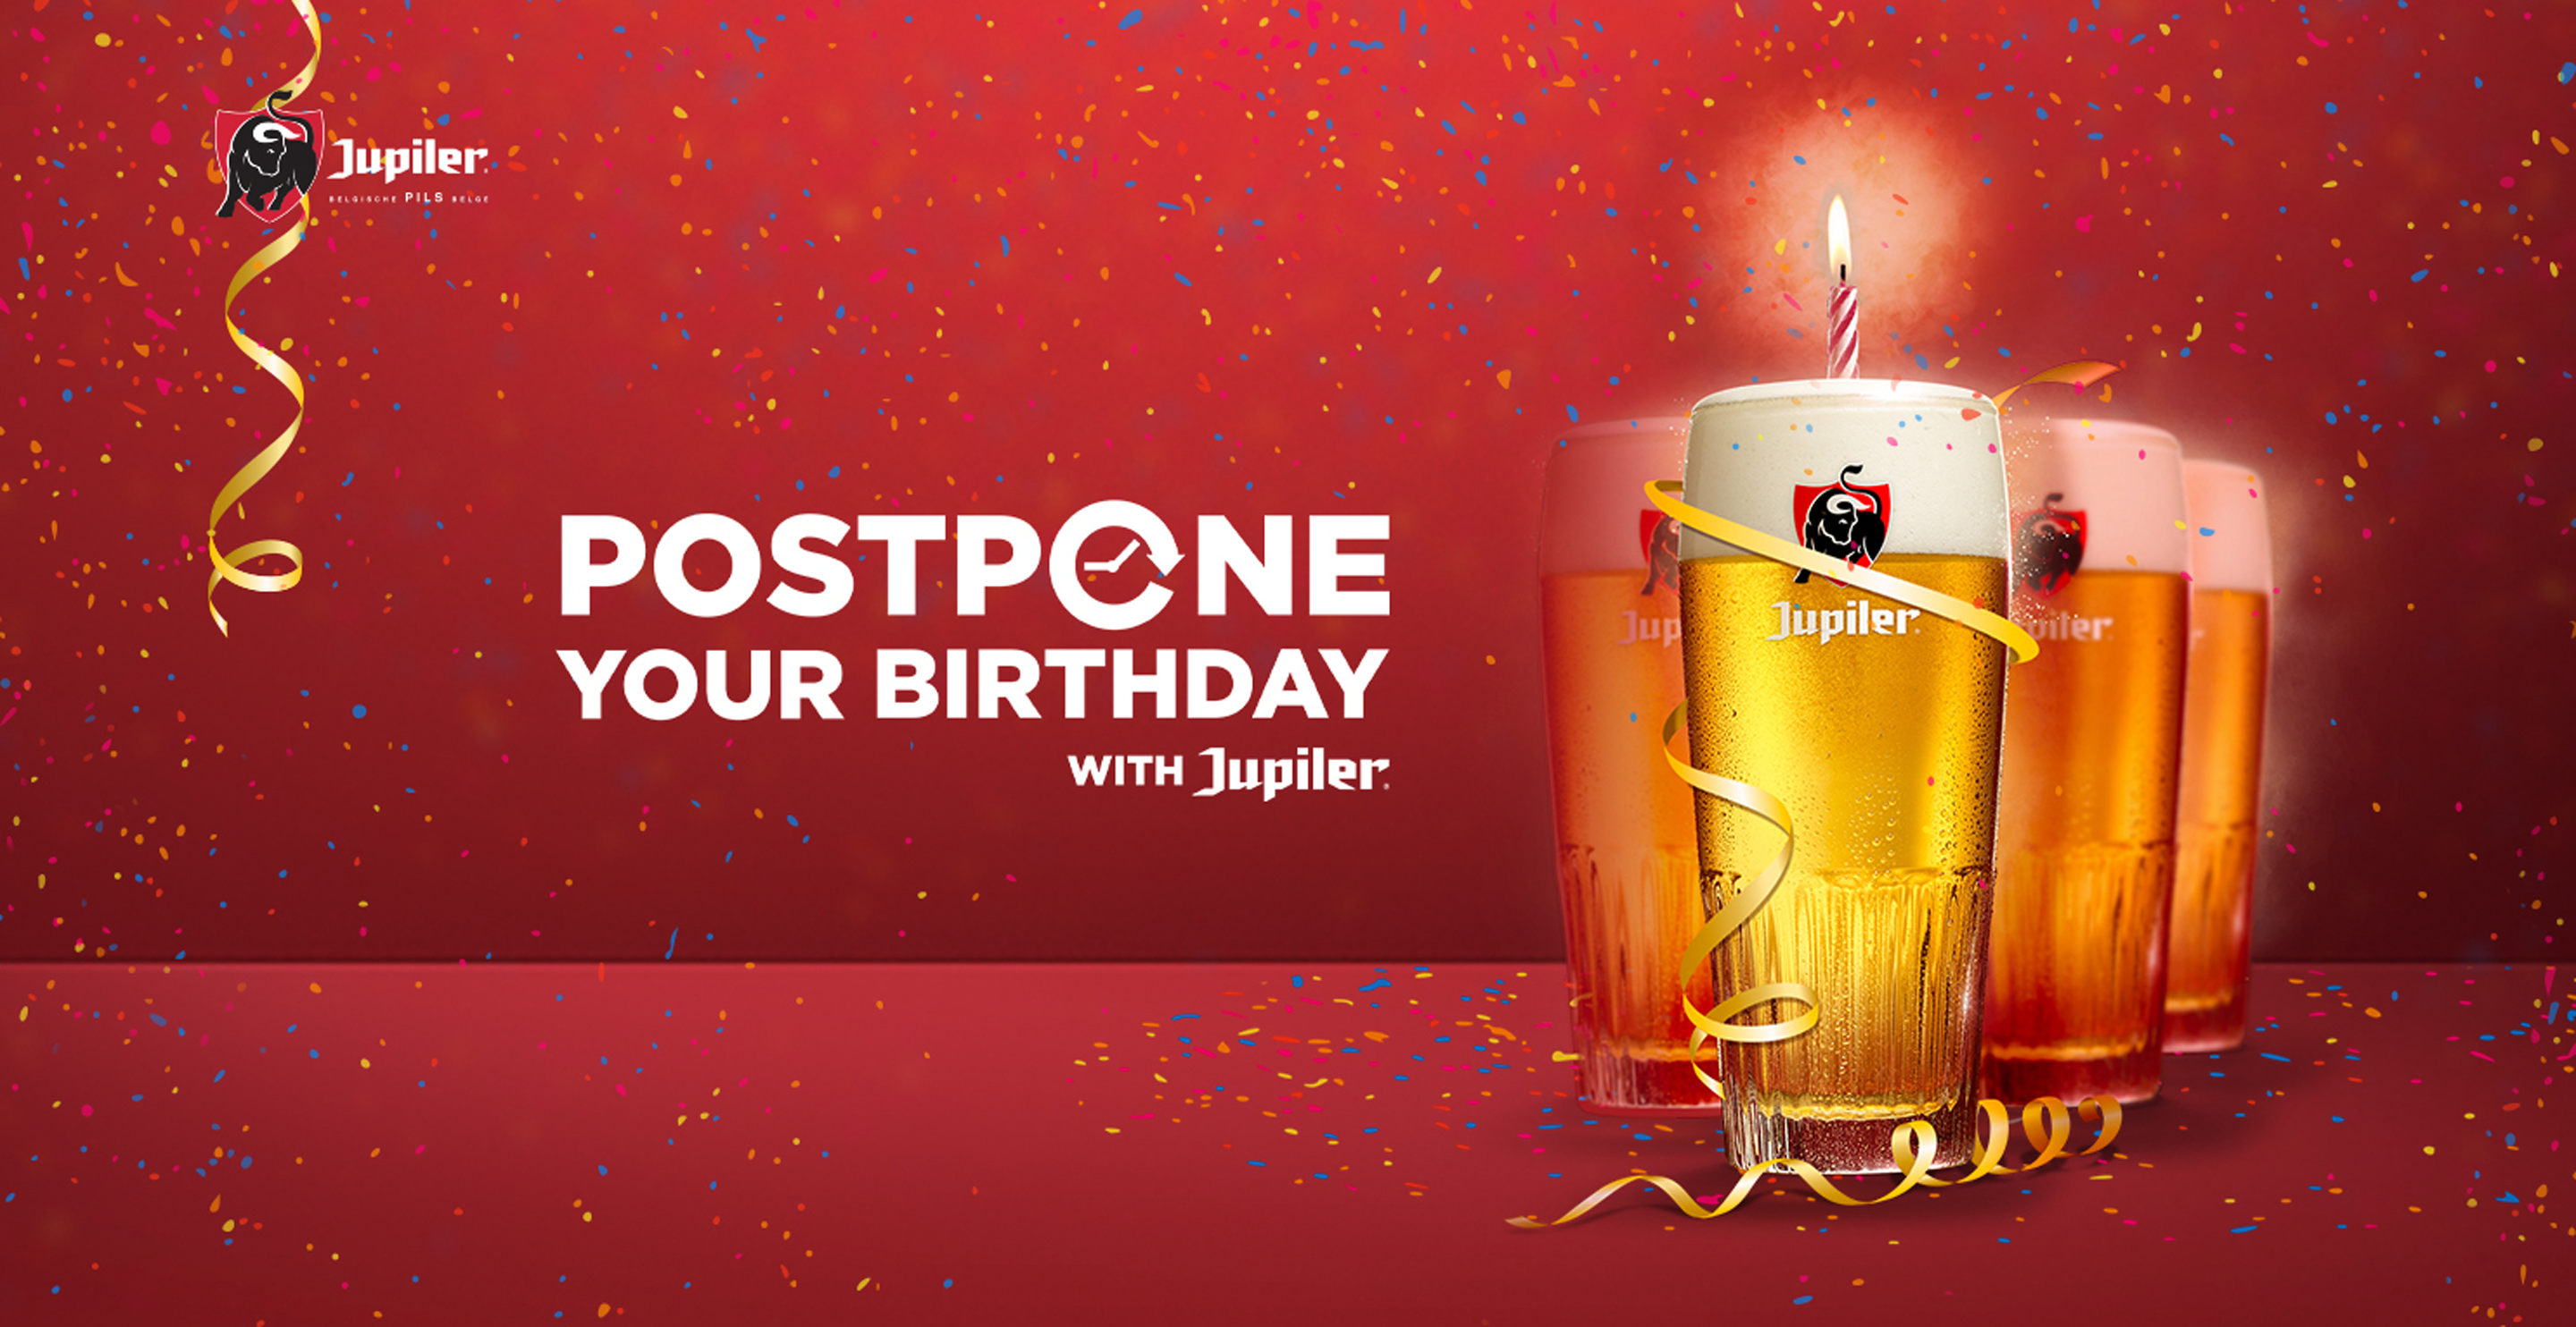 Postpone Your Birthday